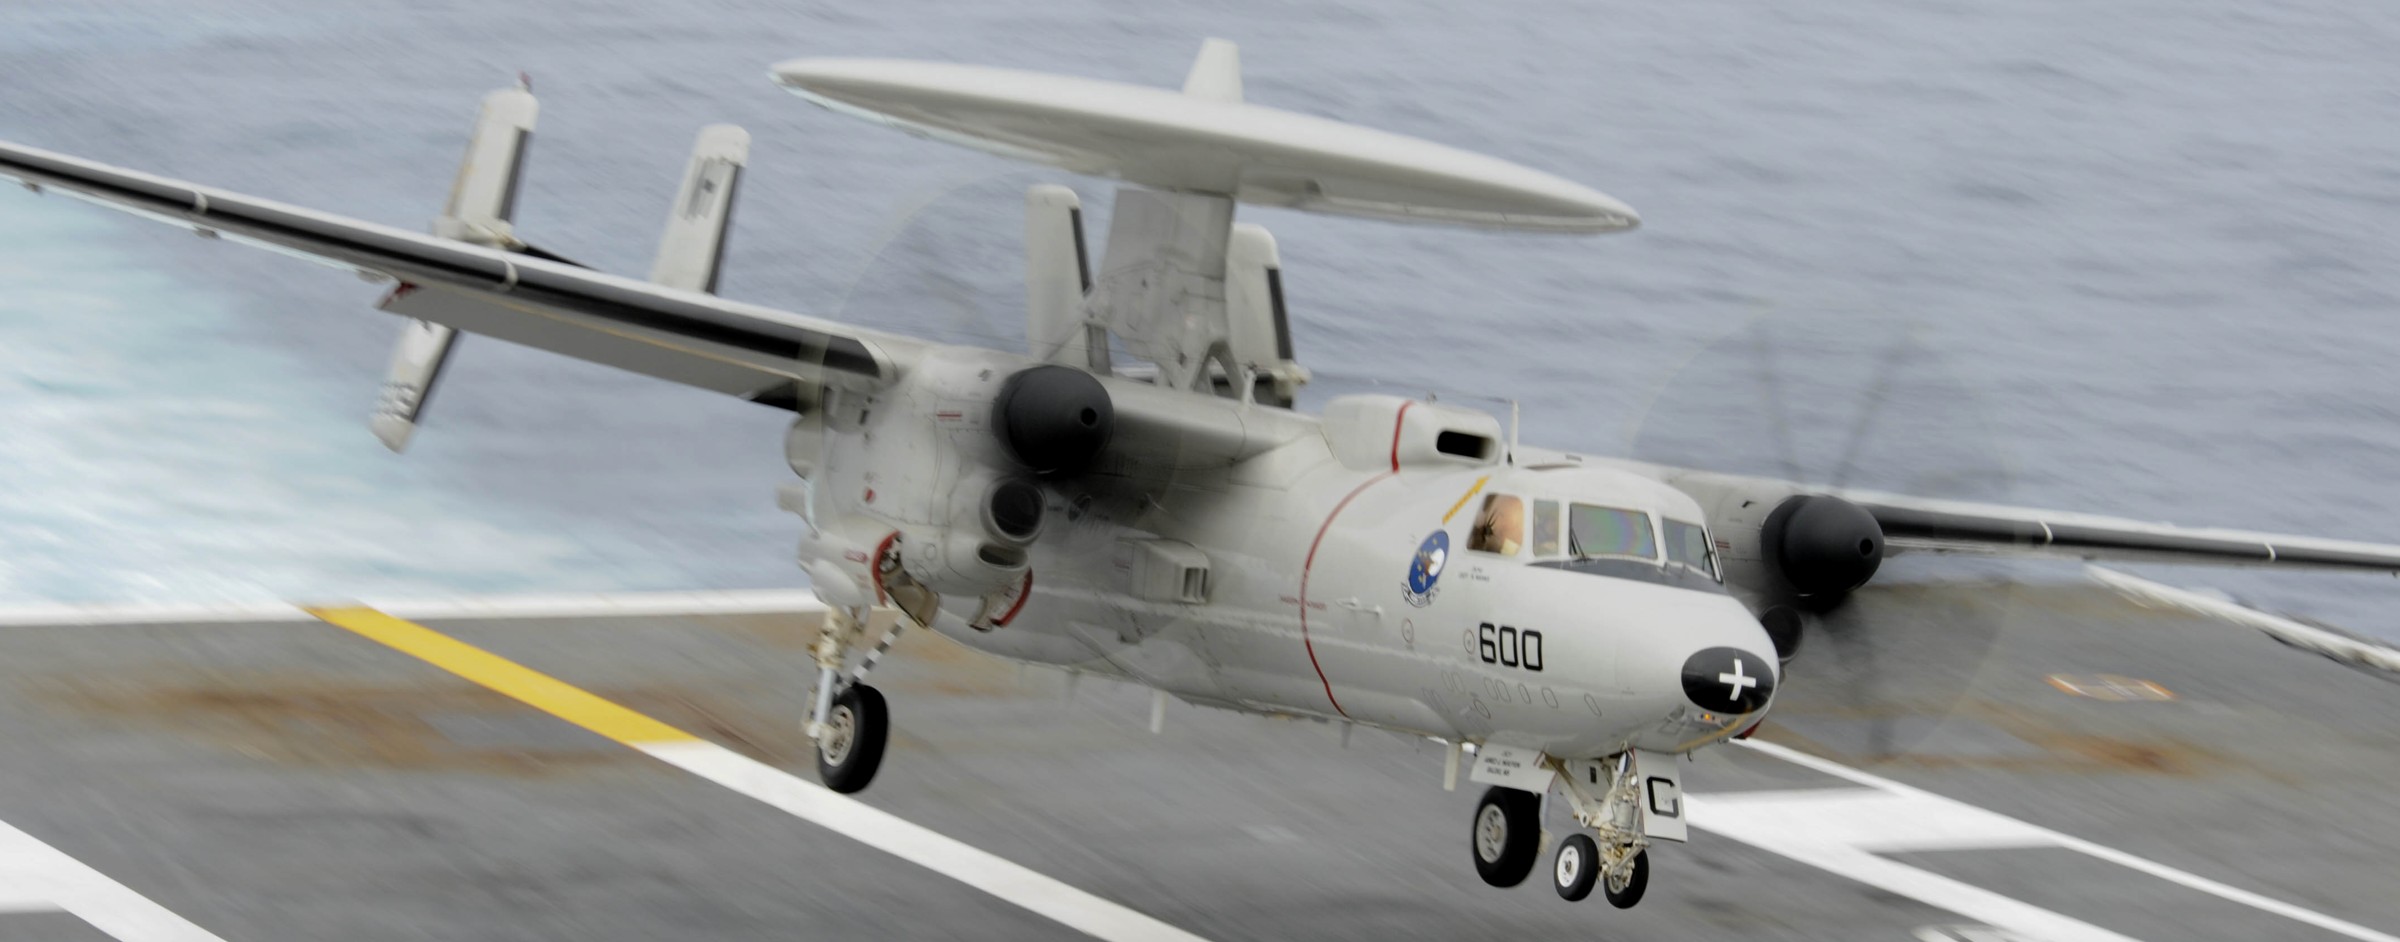 vaw-117 wallbangers carrier airborne early warning squadron navy e-2c hawkeye cvw-11 uss nimitz cvn-68 122